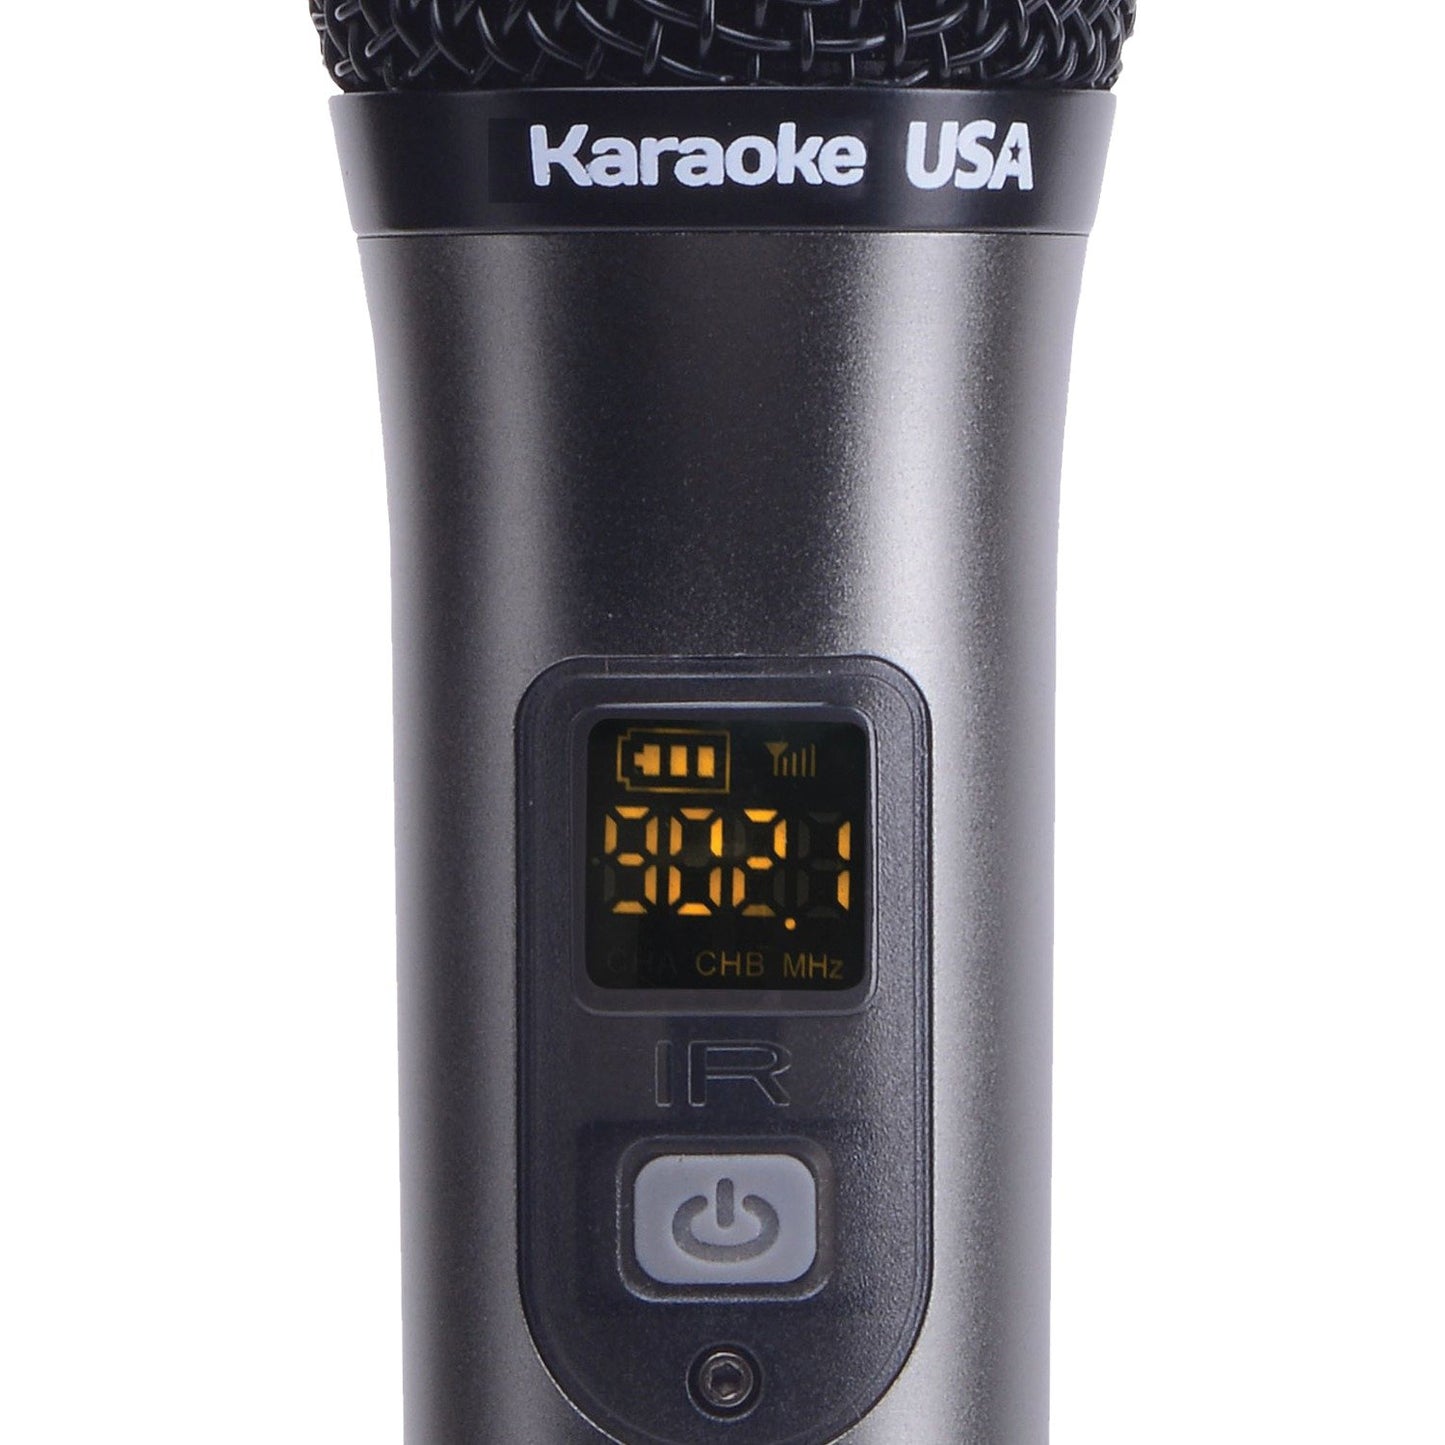 Karaoke Usa WM900 900MHz UHF Wireless Handheld Microphone